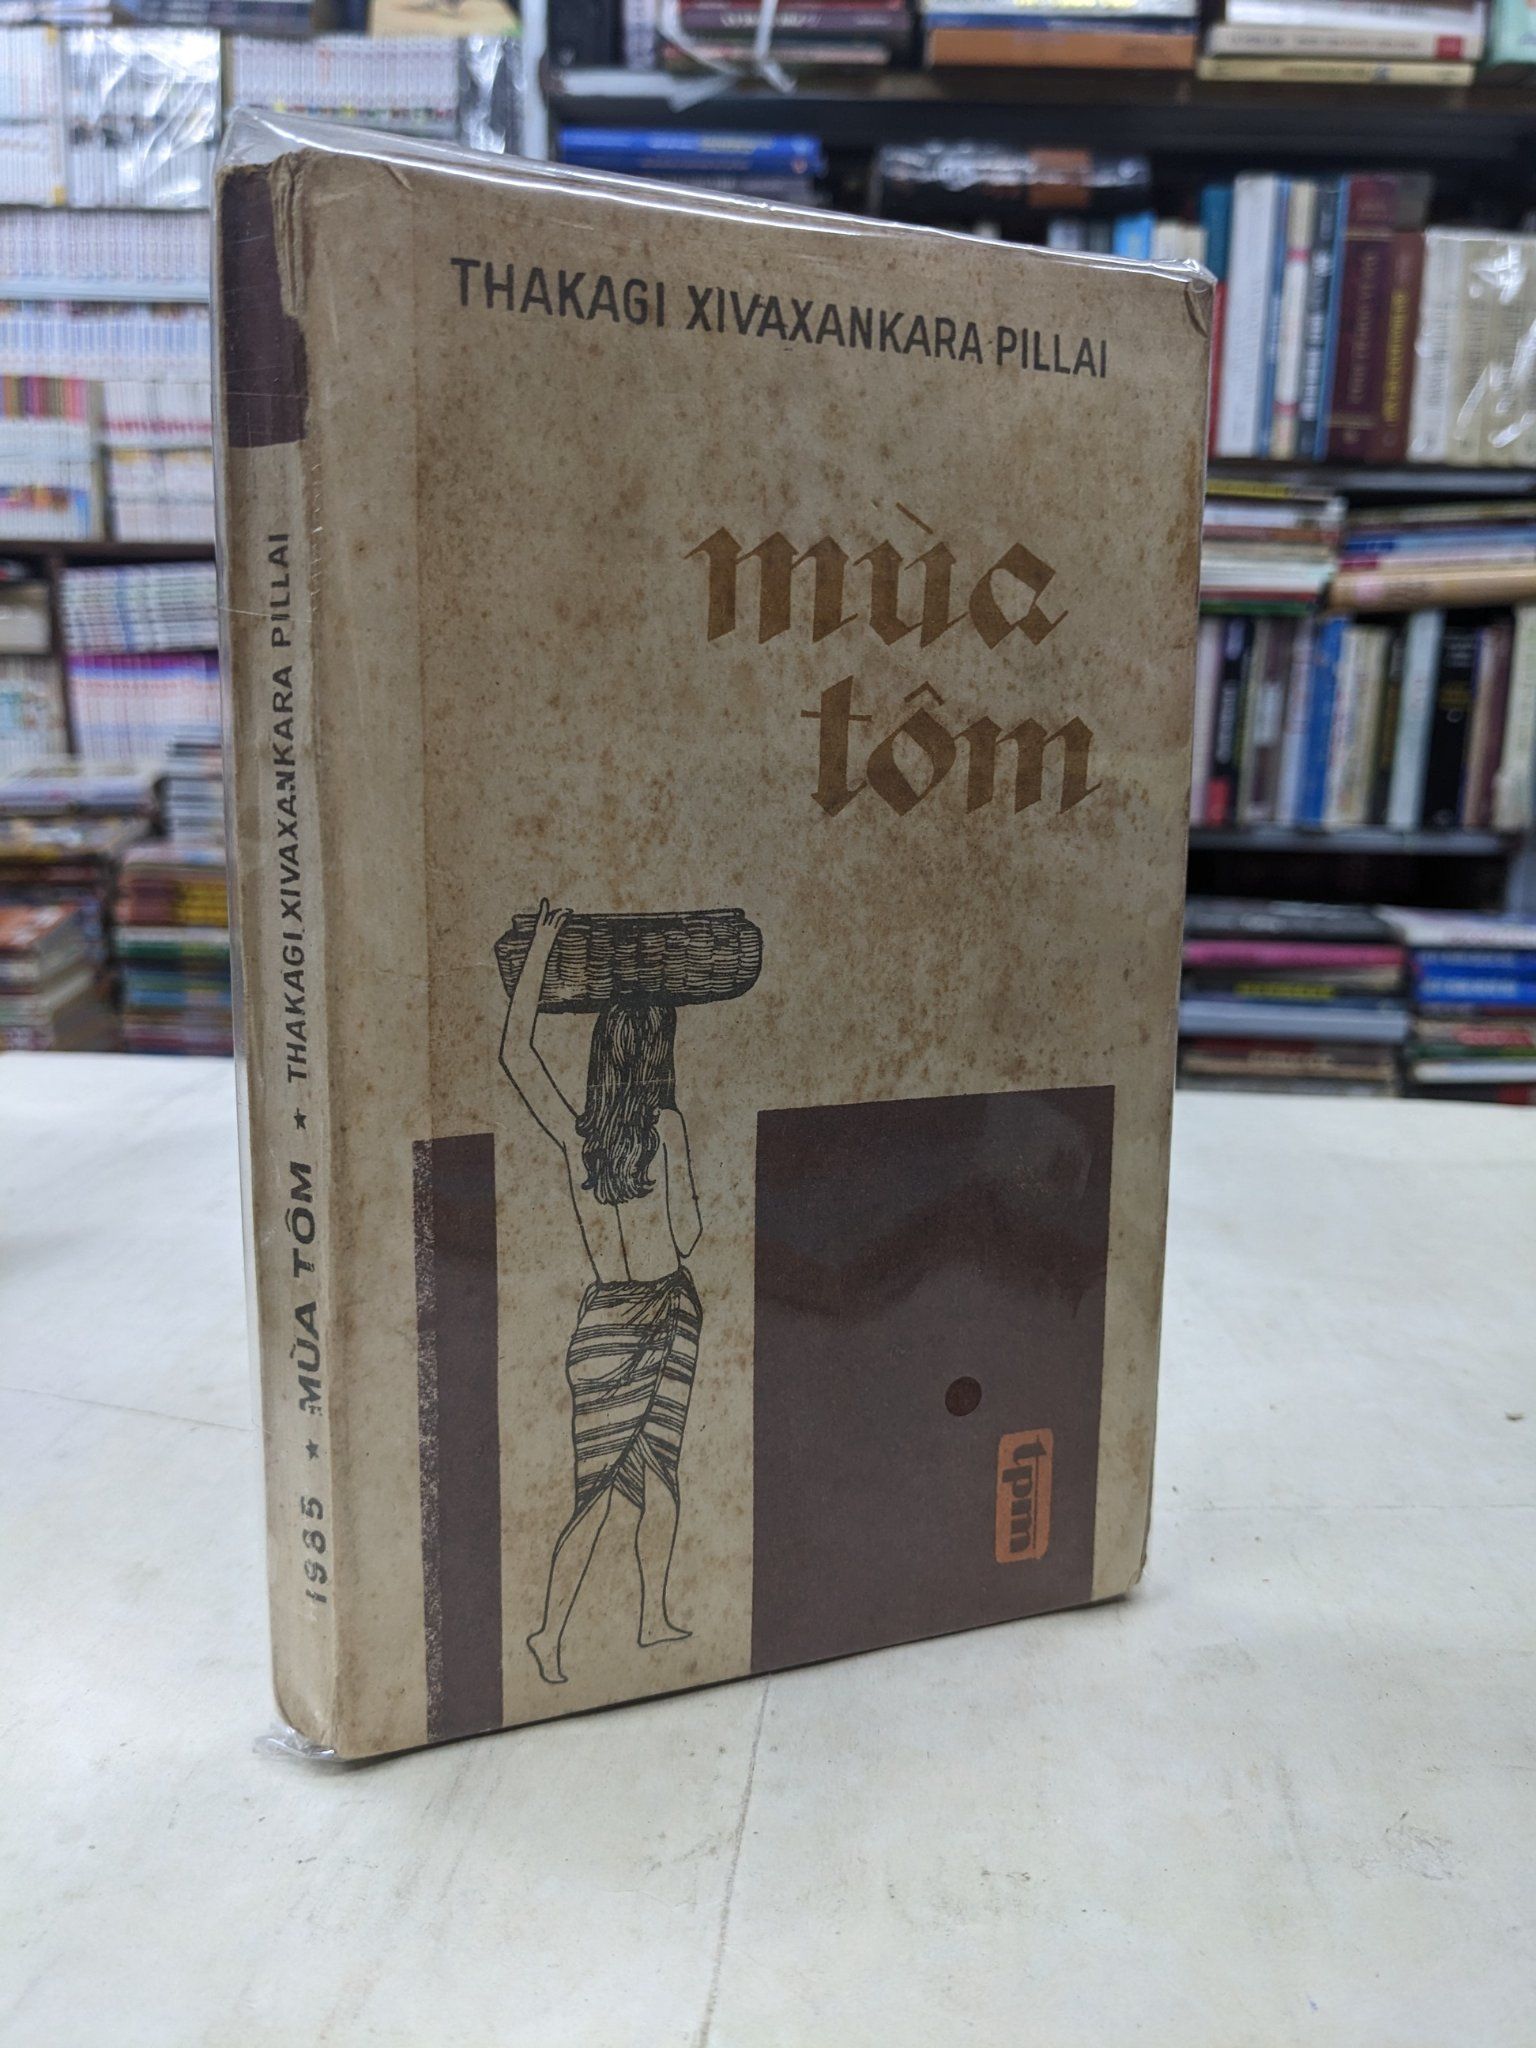  Mùa tôm - Thakagi Xivaxankara Pillai 